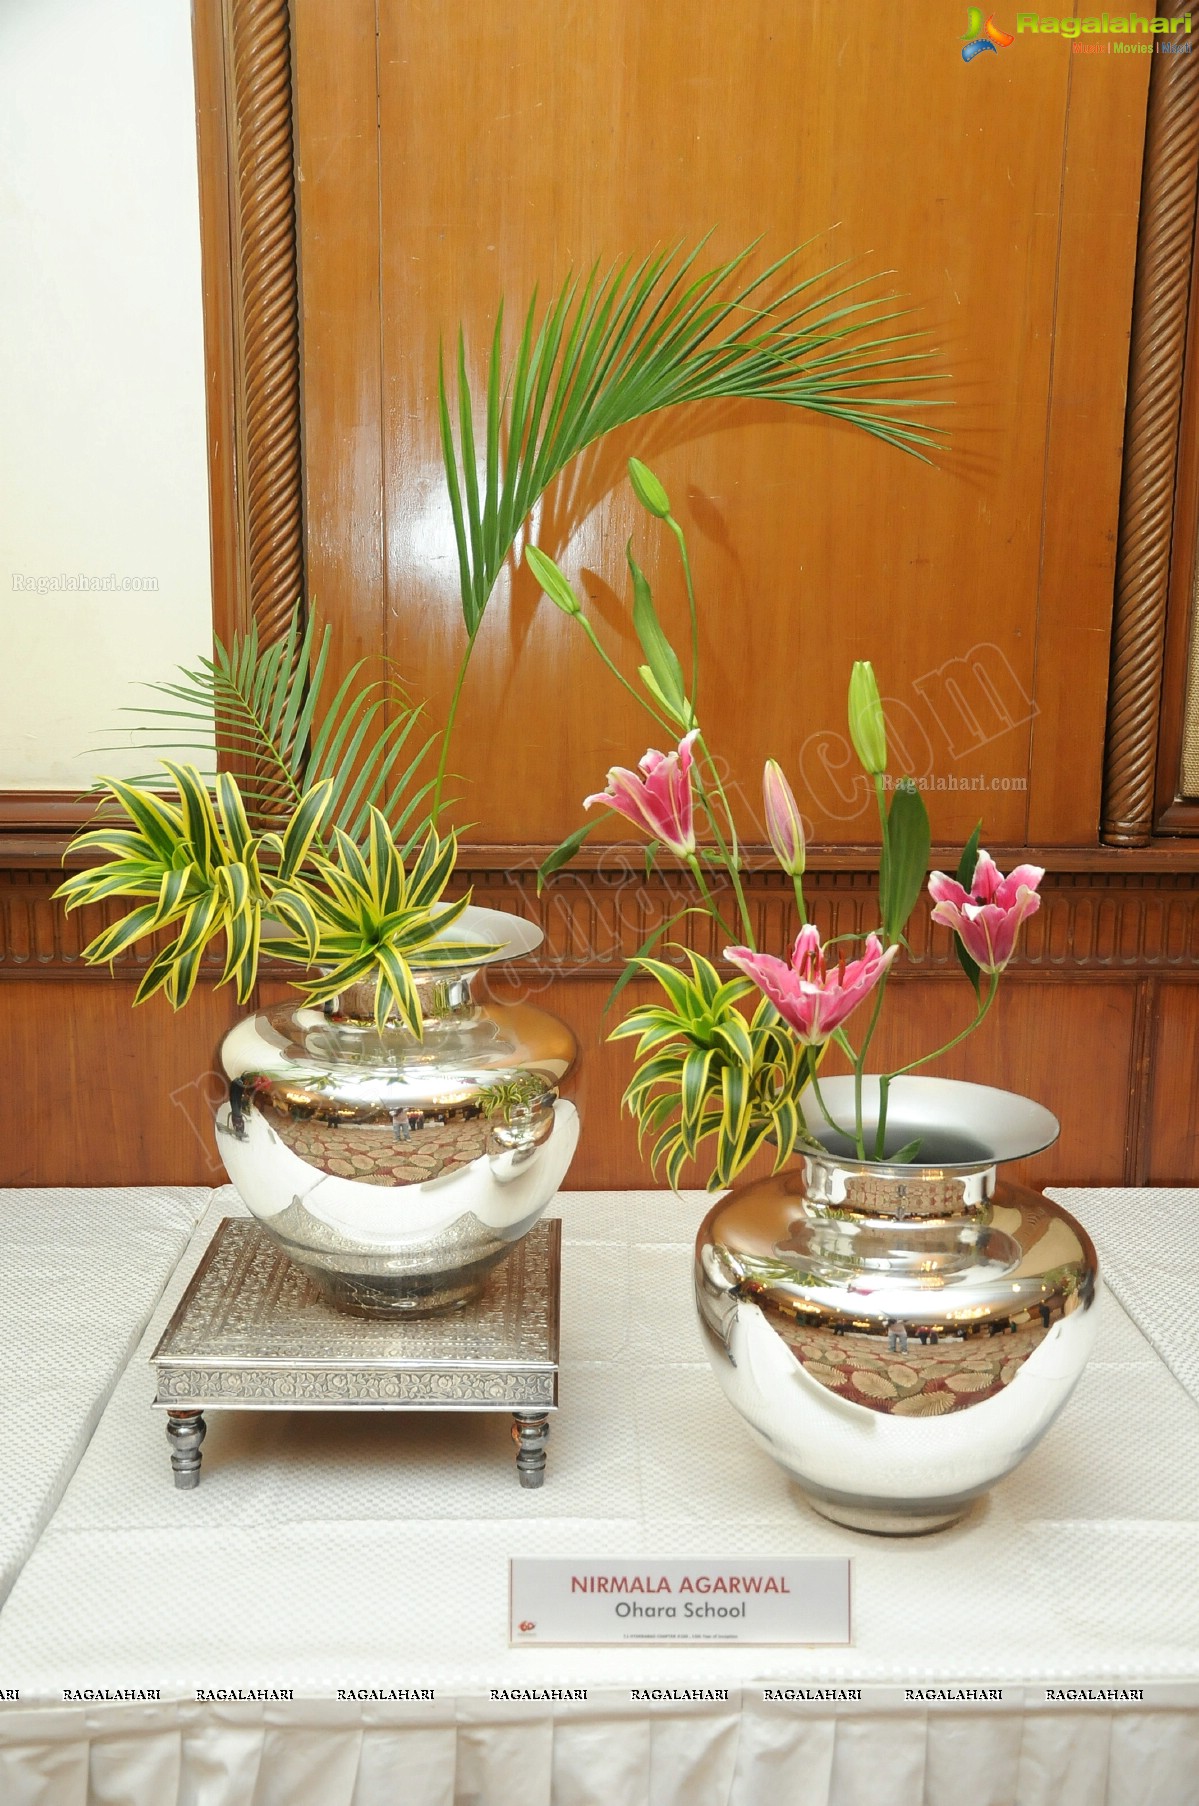 'Shashtika' Ikebana Exhibition